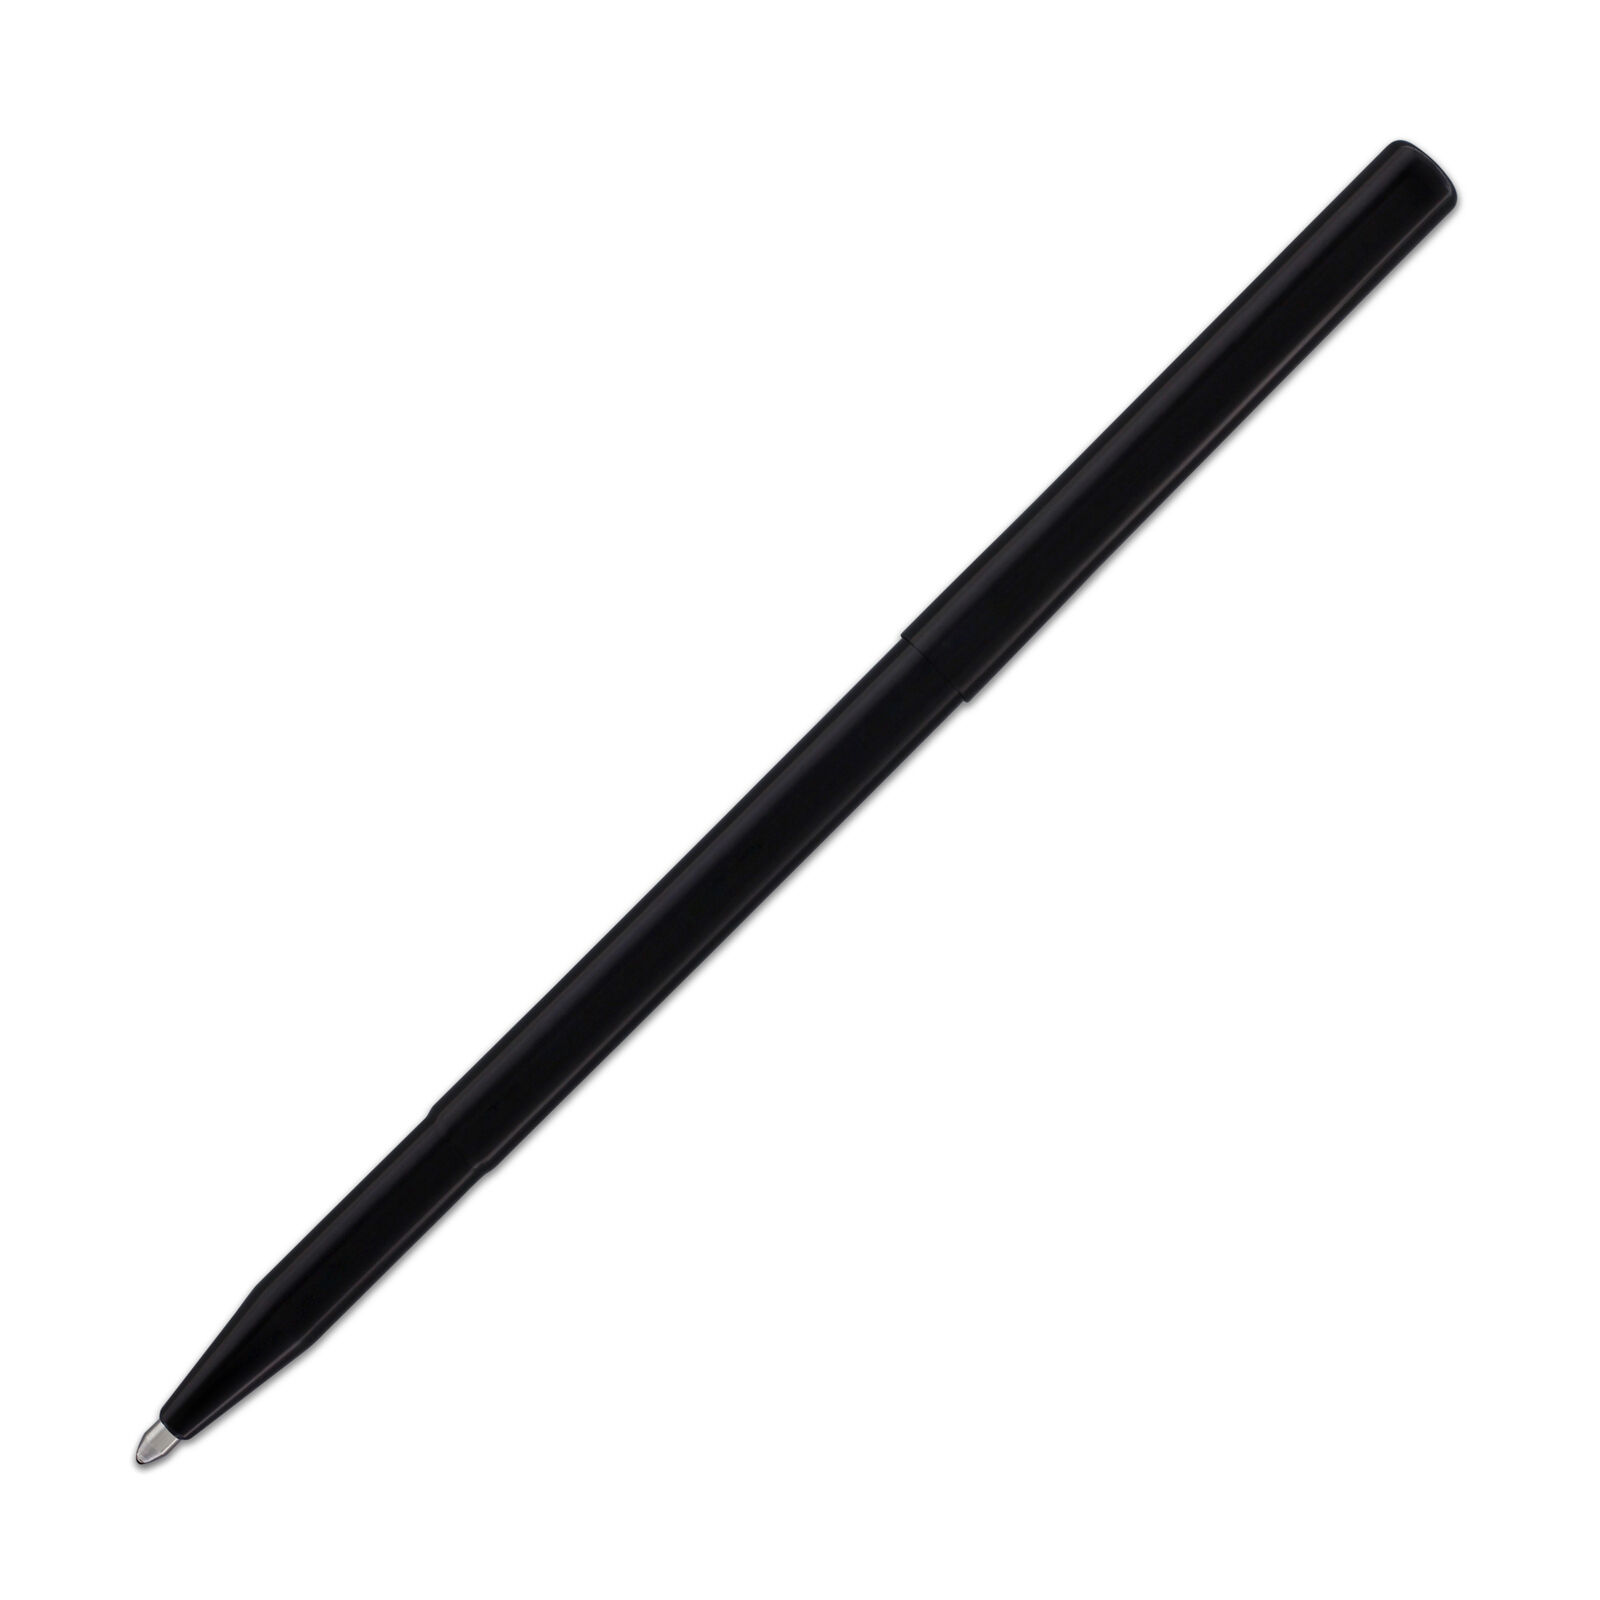 Fisher Space Pen Stowaway Ballpoint Pen in Black Anodized Aluminum - NEW